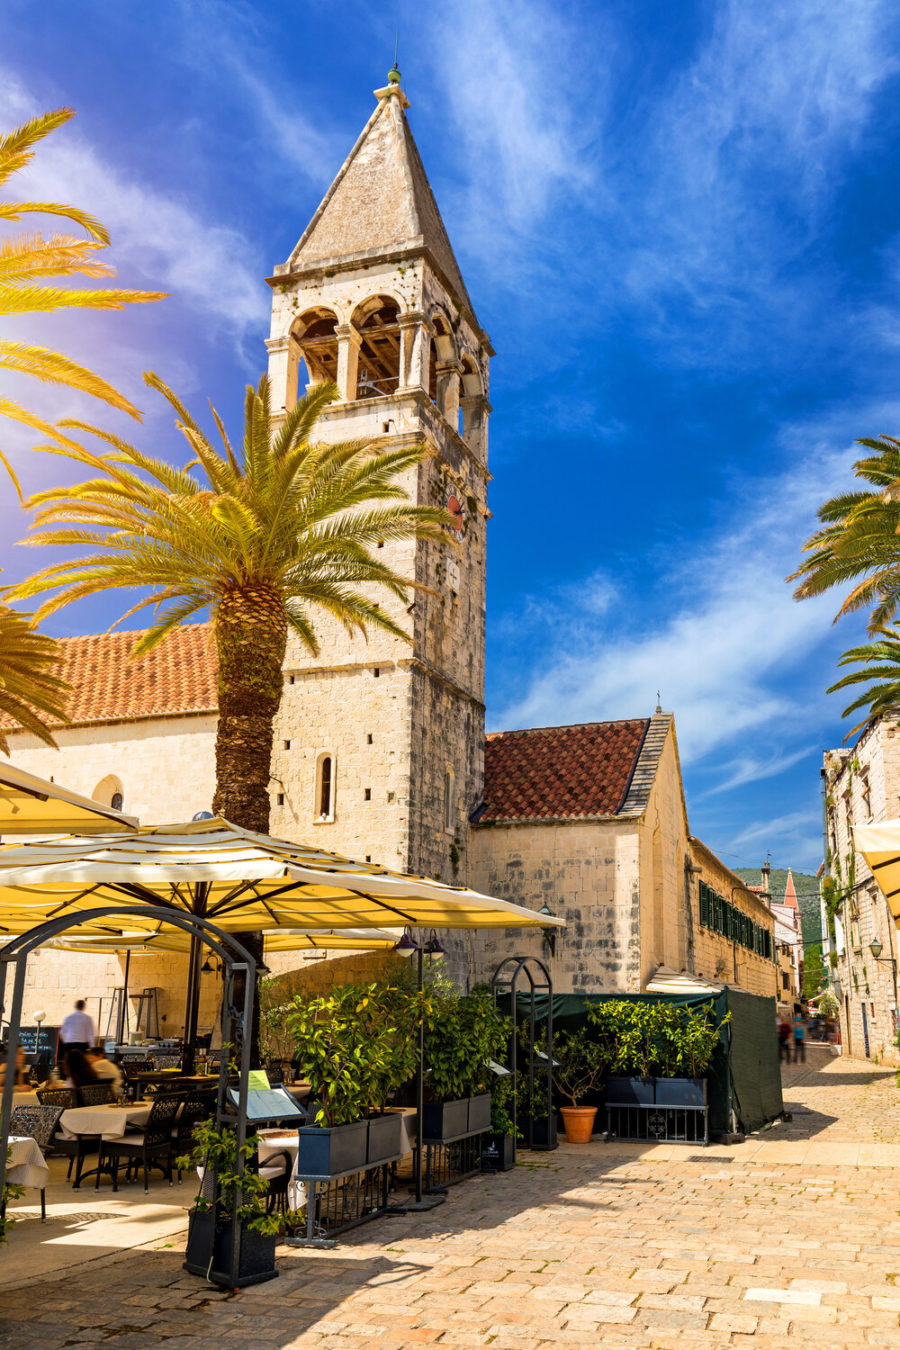 Medieval Trogir is a stop on Mendula's Dalmatian Coast cruise